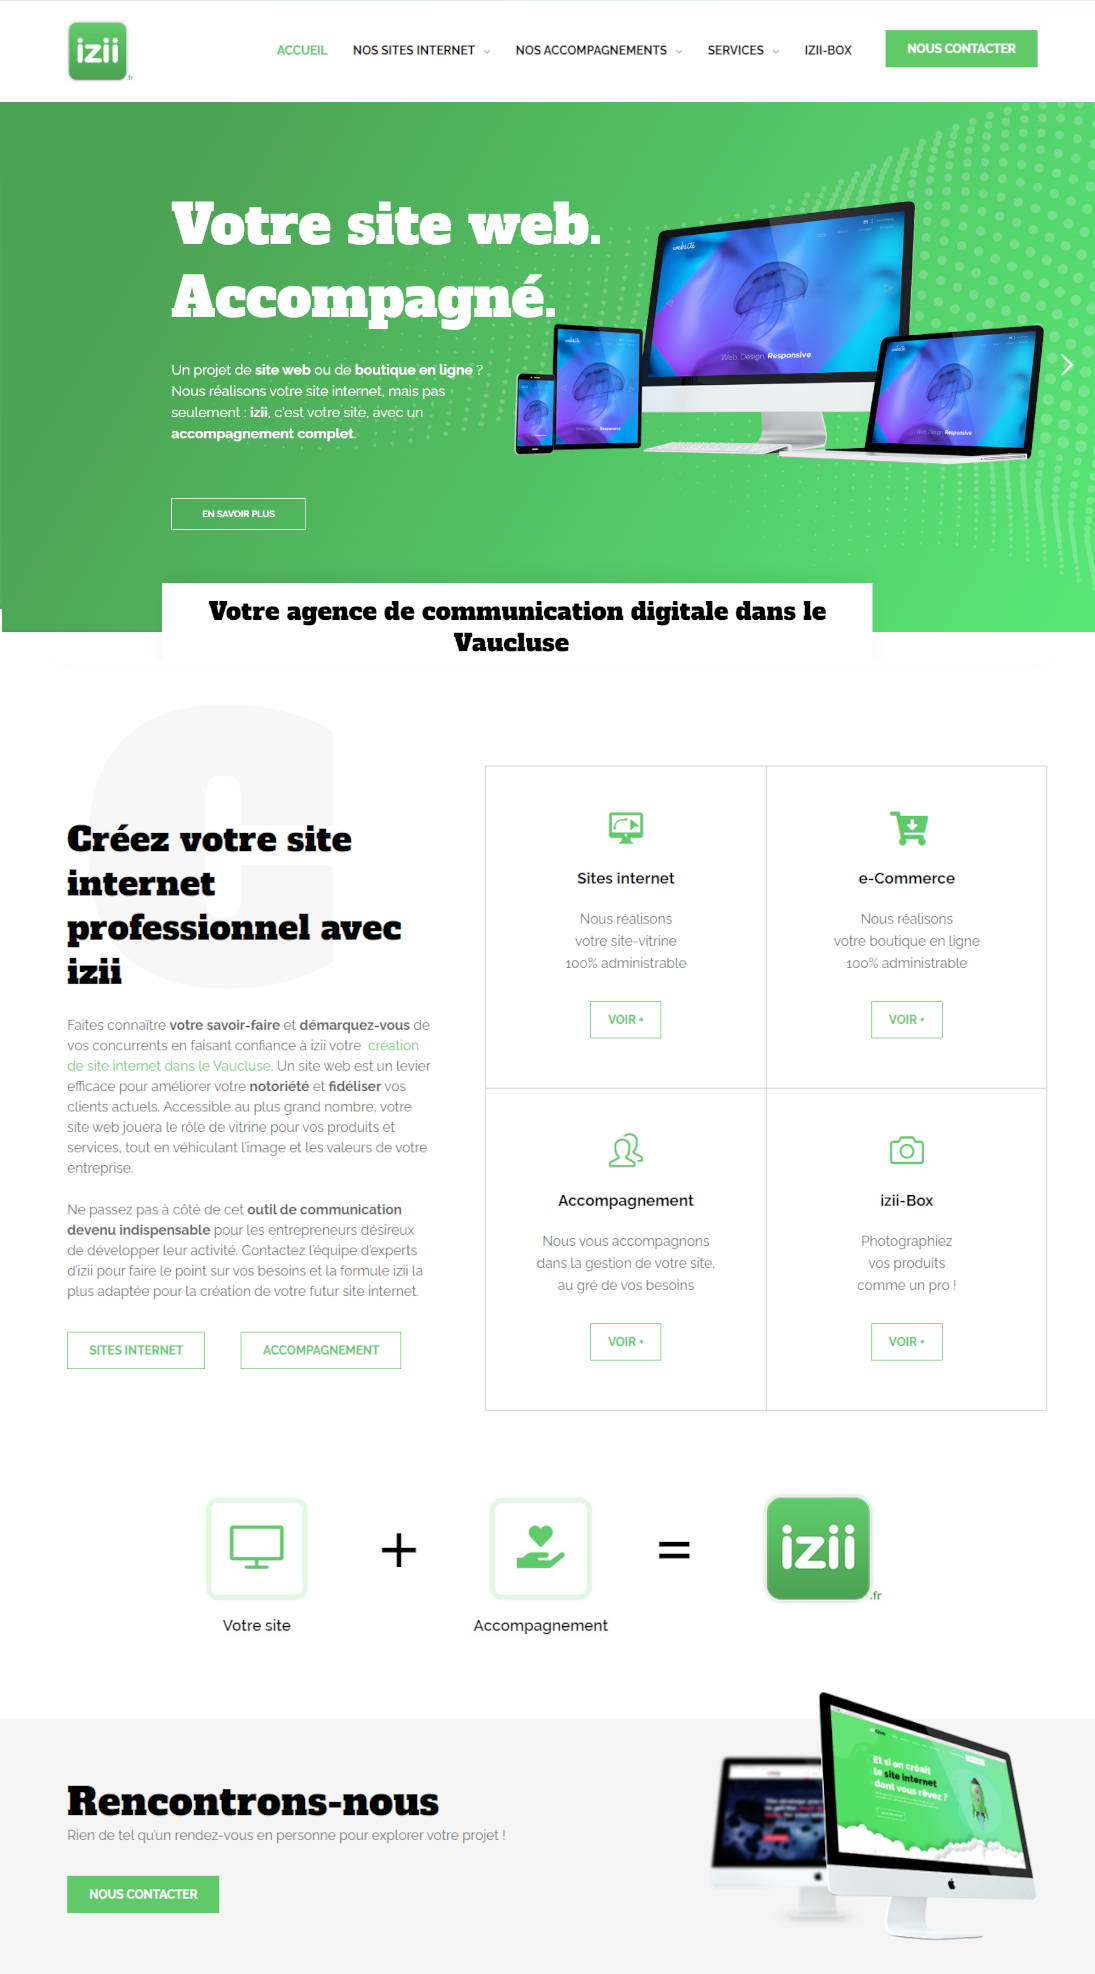 izii-agence-communication-digitale-dans-le-Vaucluse_p1